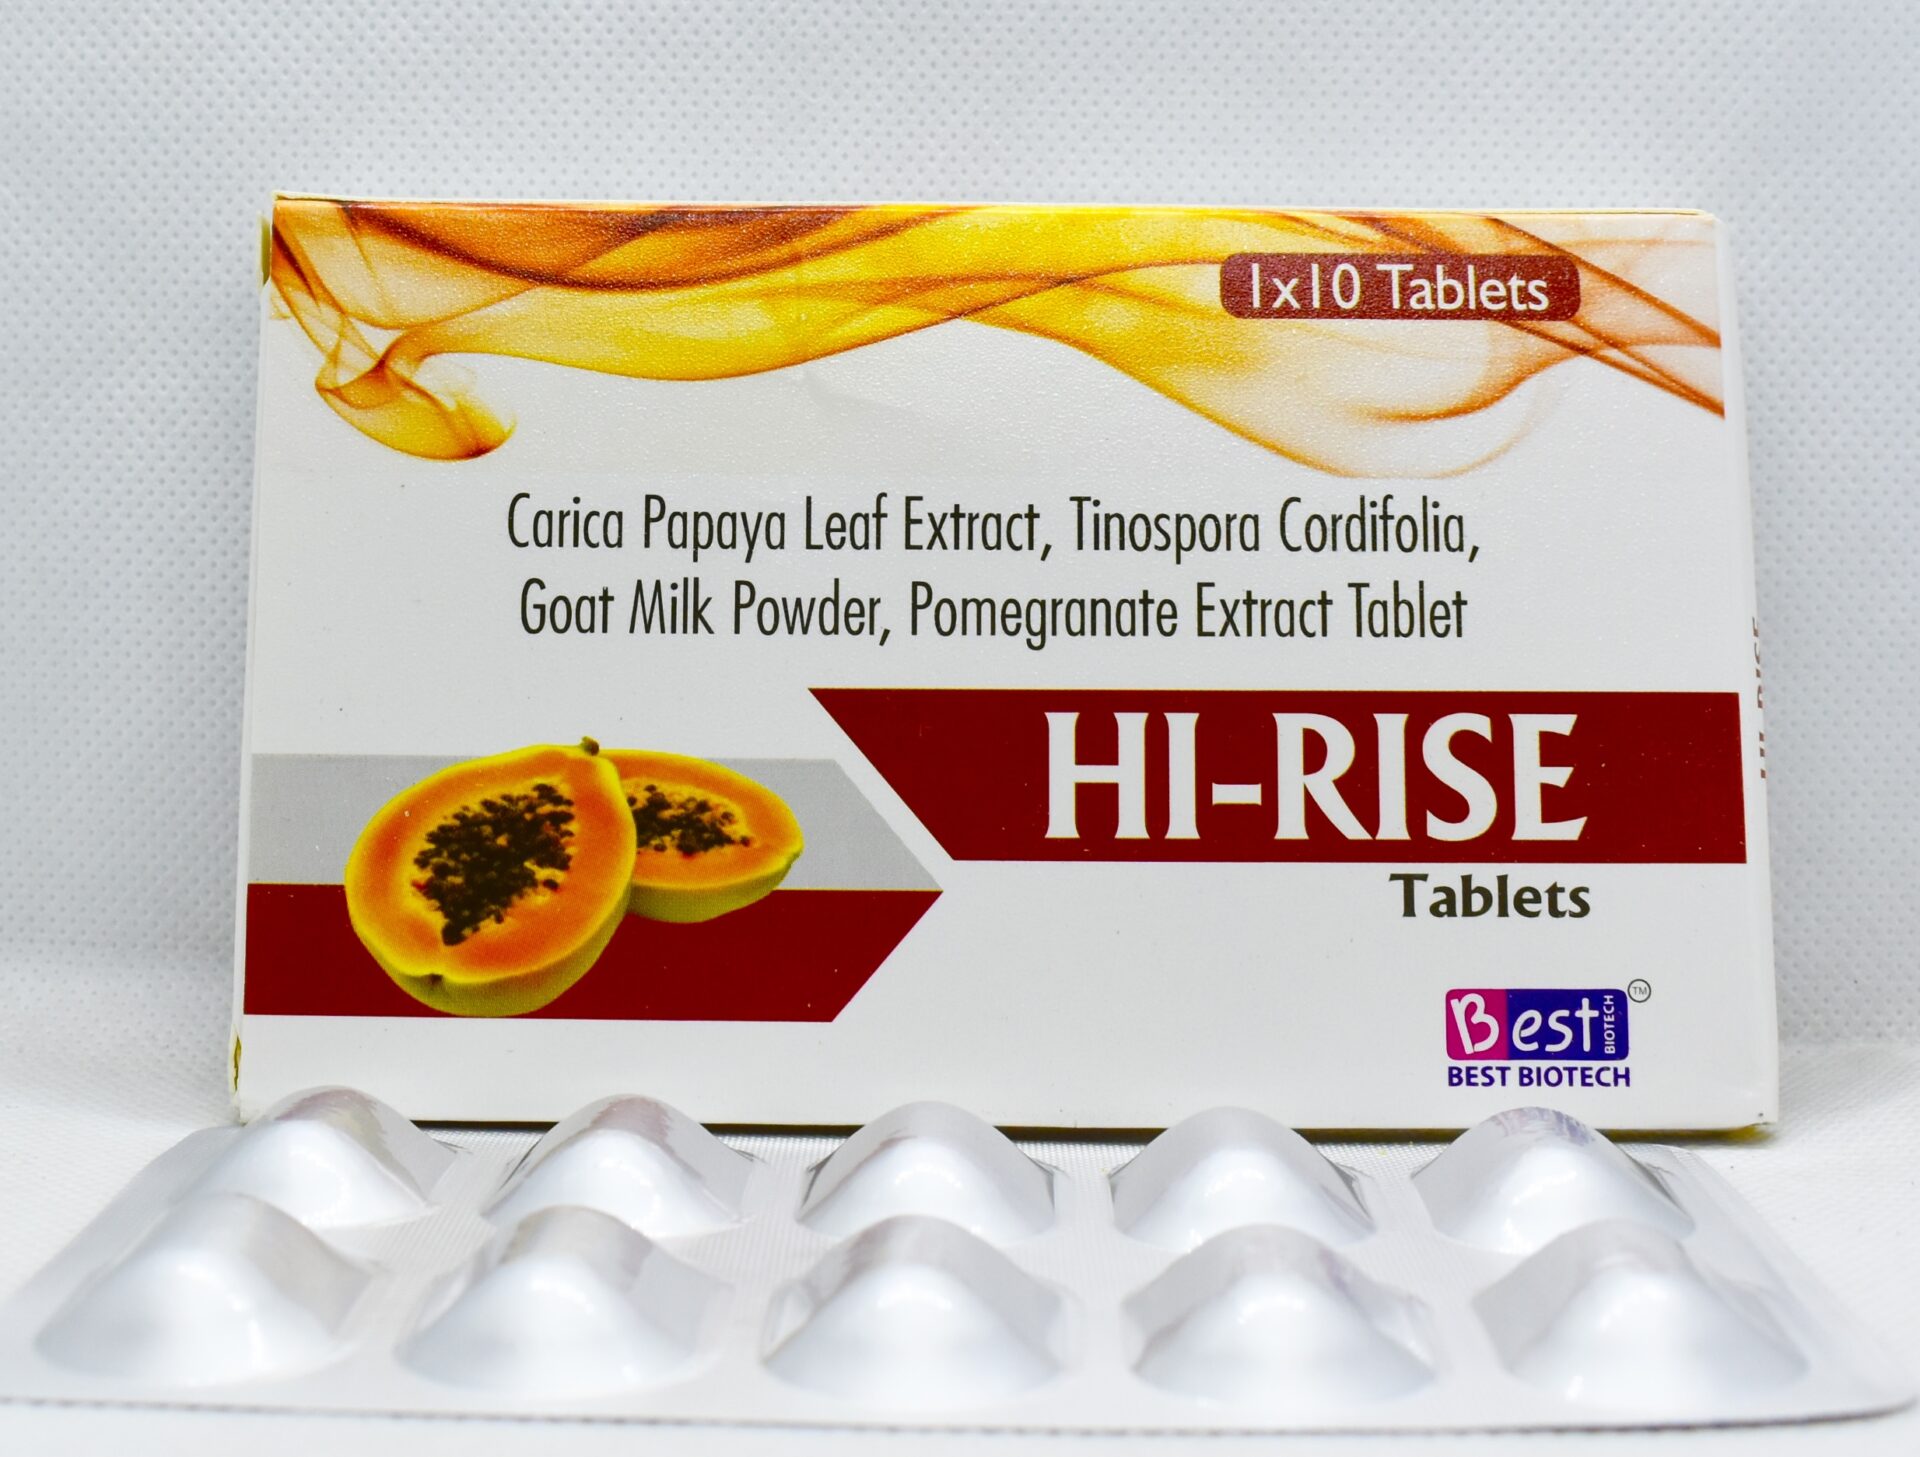 HI-RISE TABLET - Best Biotech India